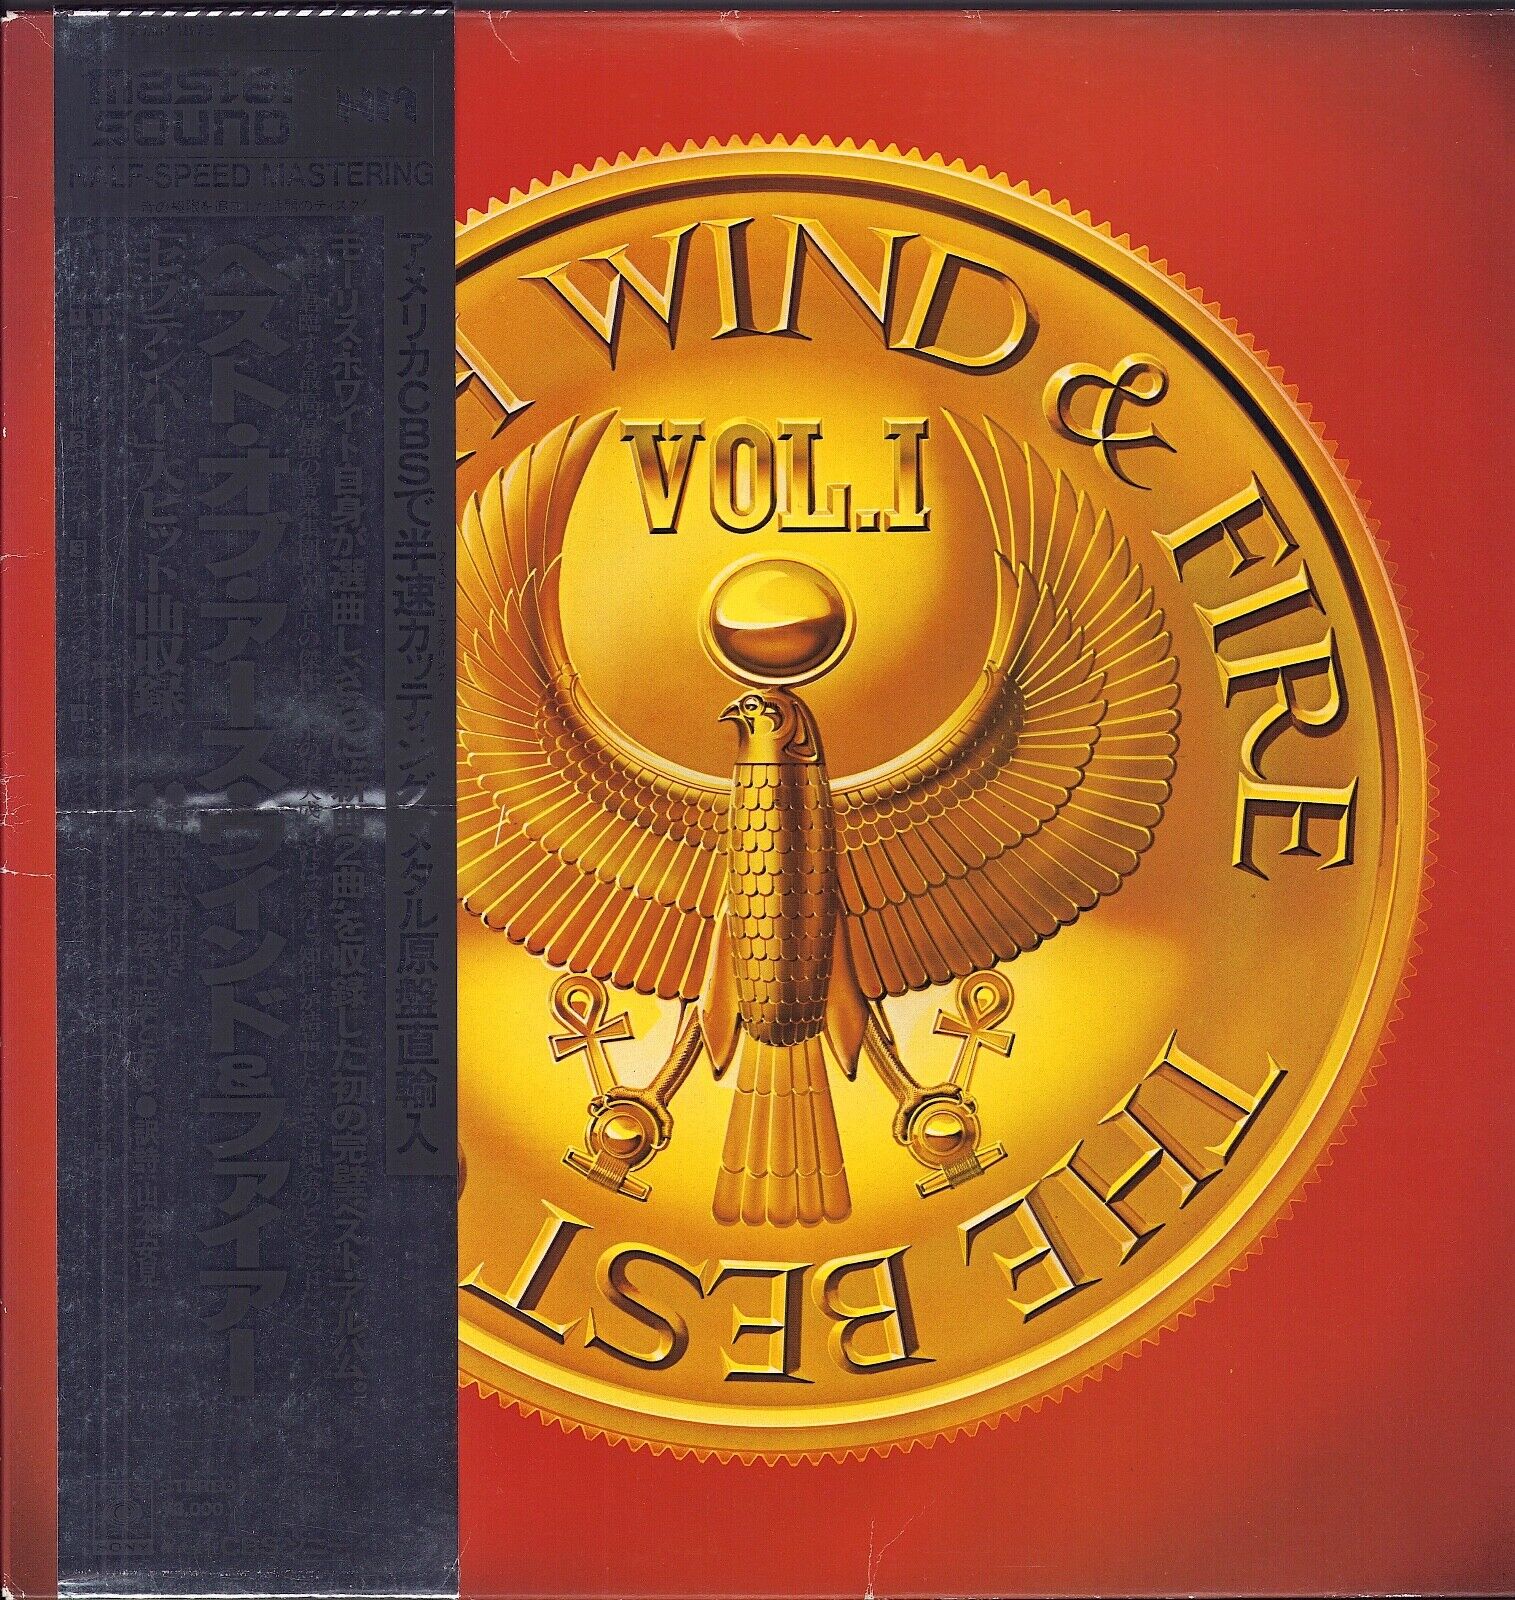 Earth, Wind & Fire ‎- The Best Of Earth, Wind & Fire Vol. I Vinyl LP Halfspeed Mastering